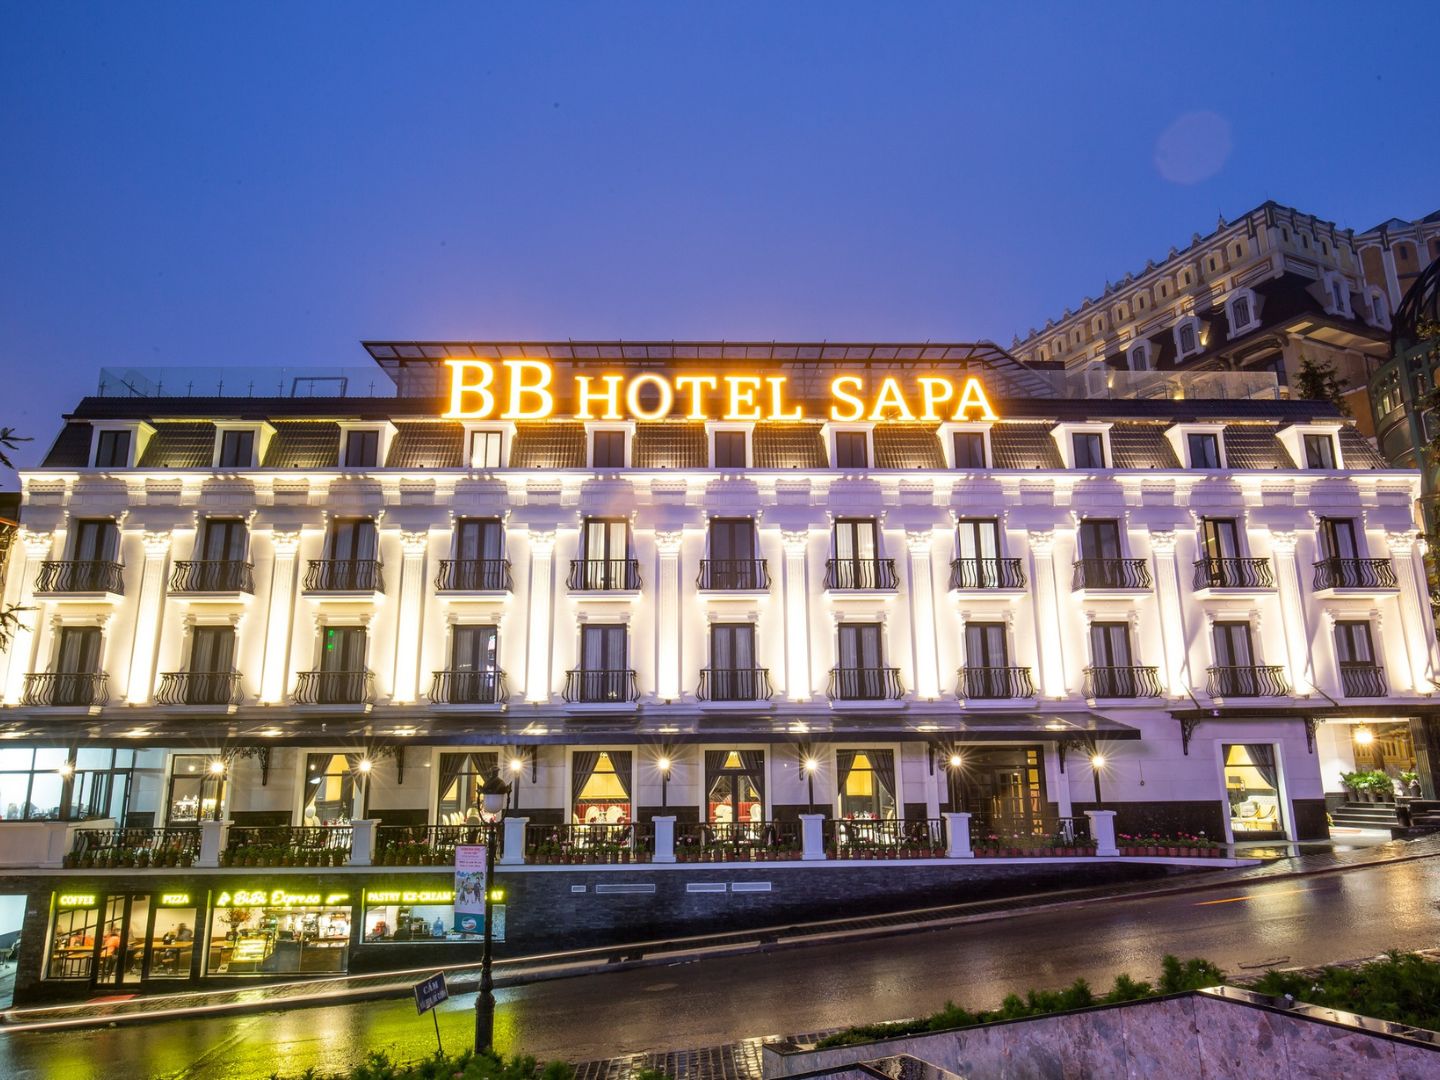 The BB Hotel Sapa Vietnam